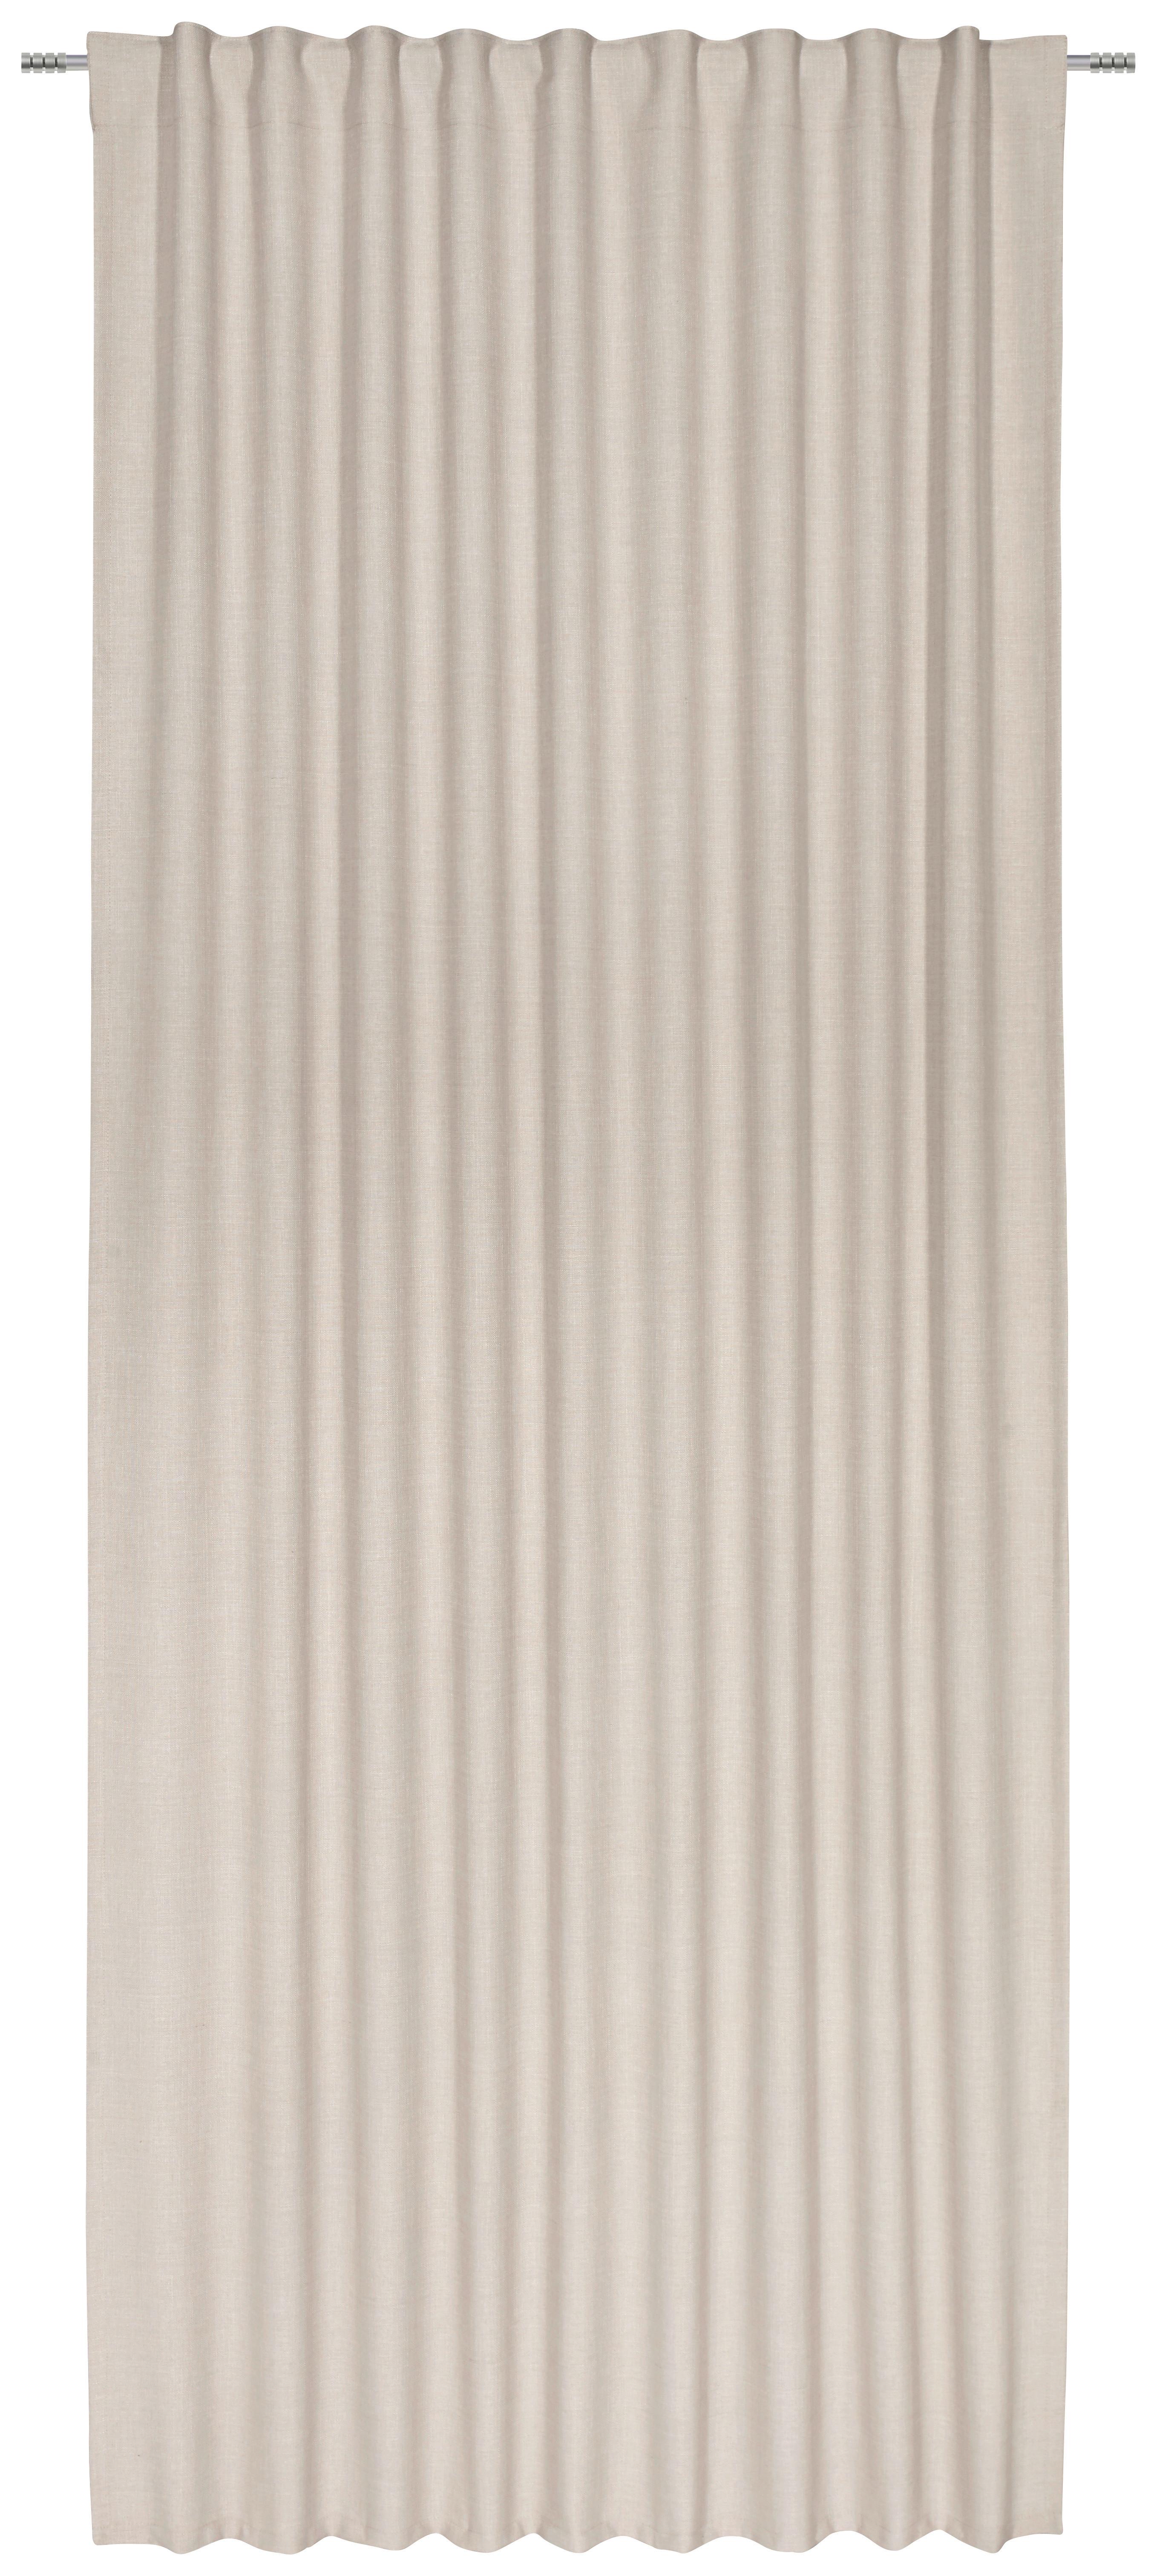 Fertigvorhang Leo in Sand ca. 135x255cm - Sandfarben, Textil (135/255cm) - Premium Living